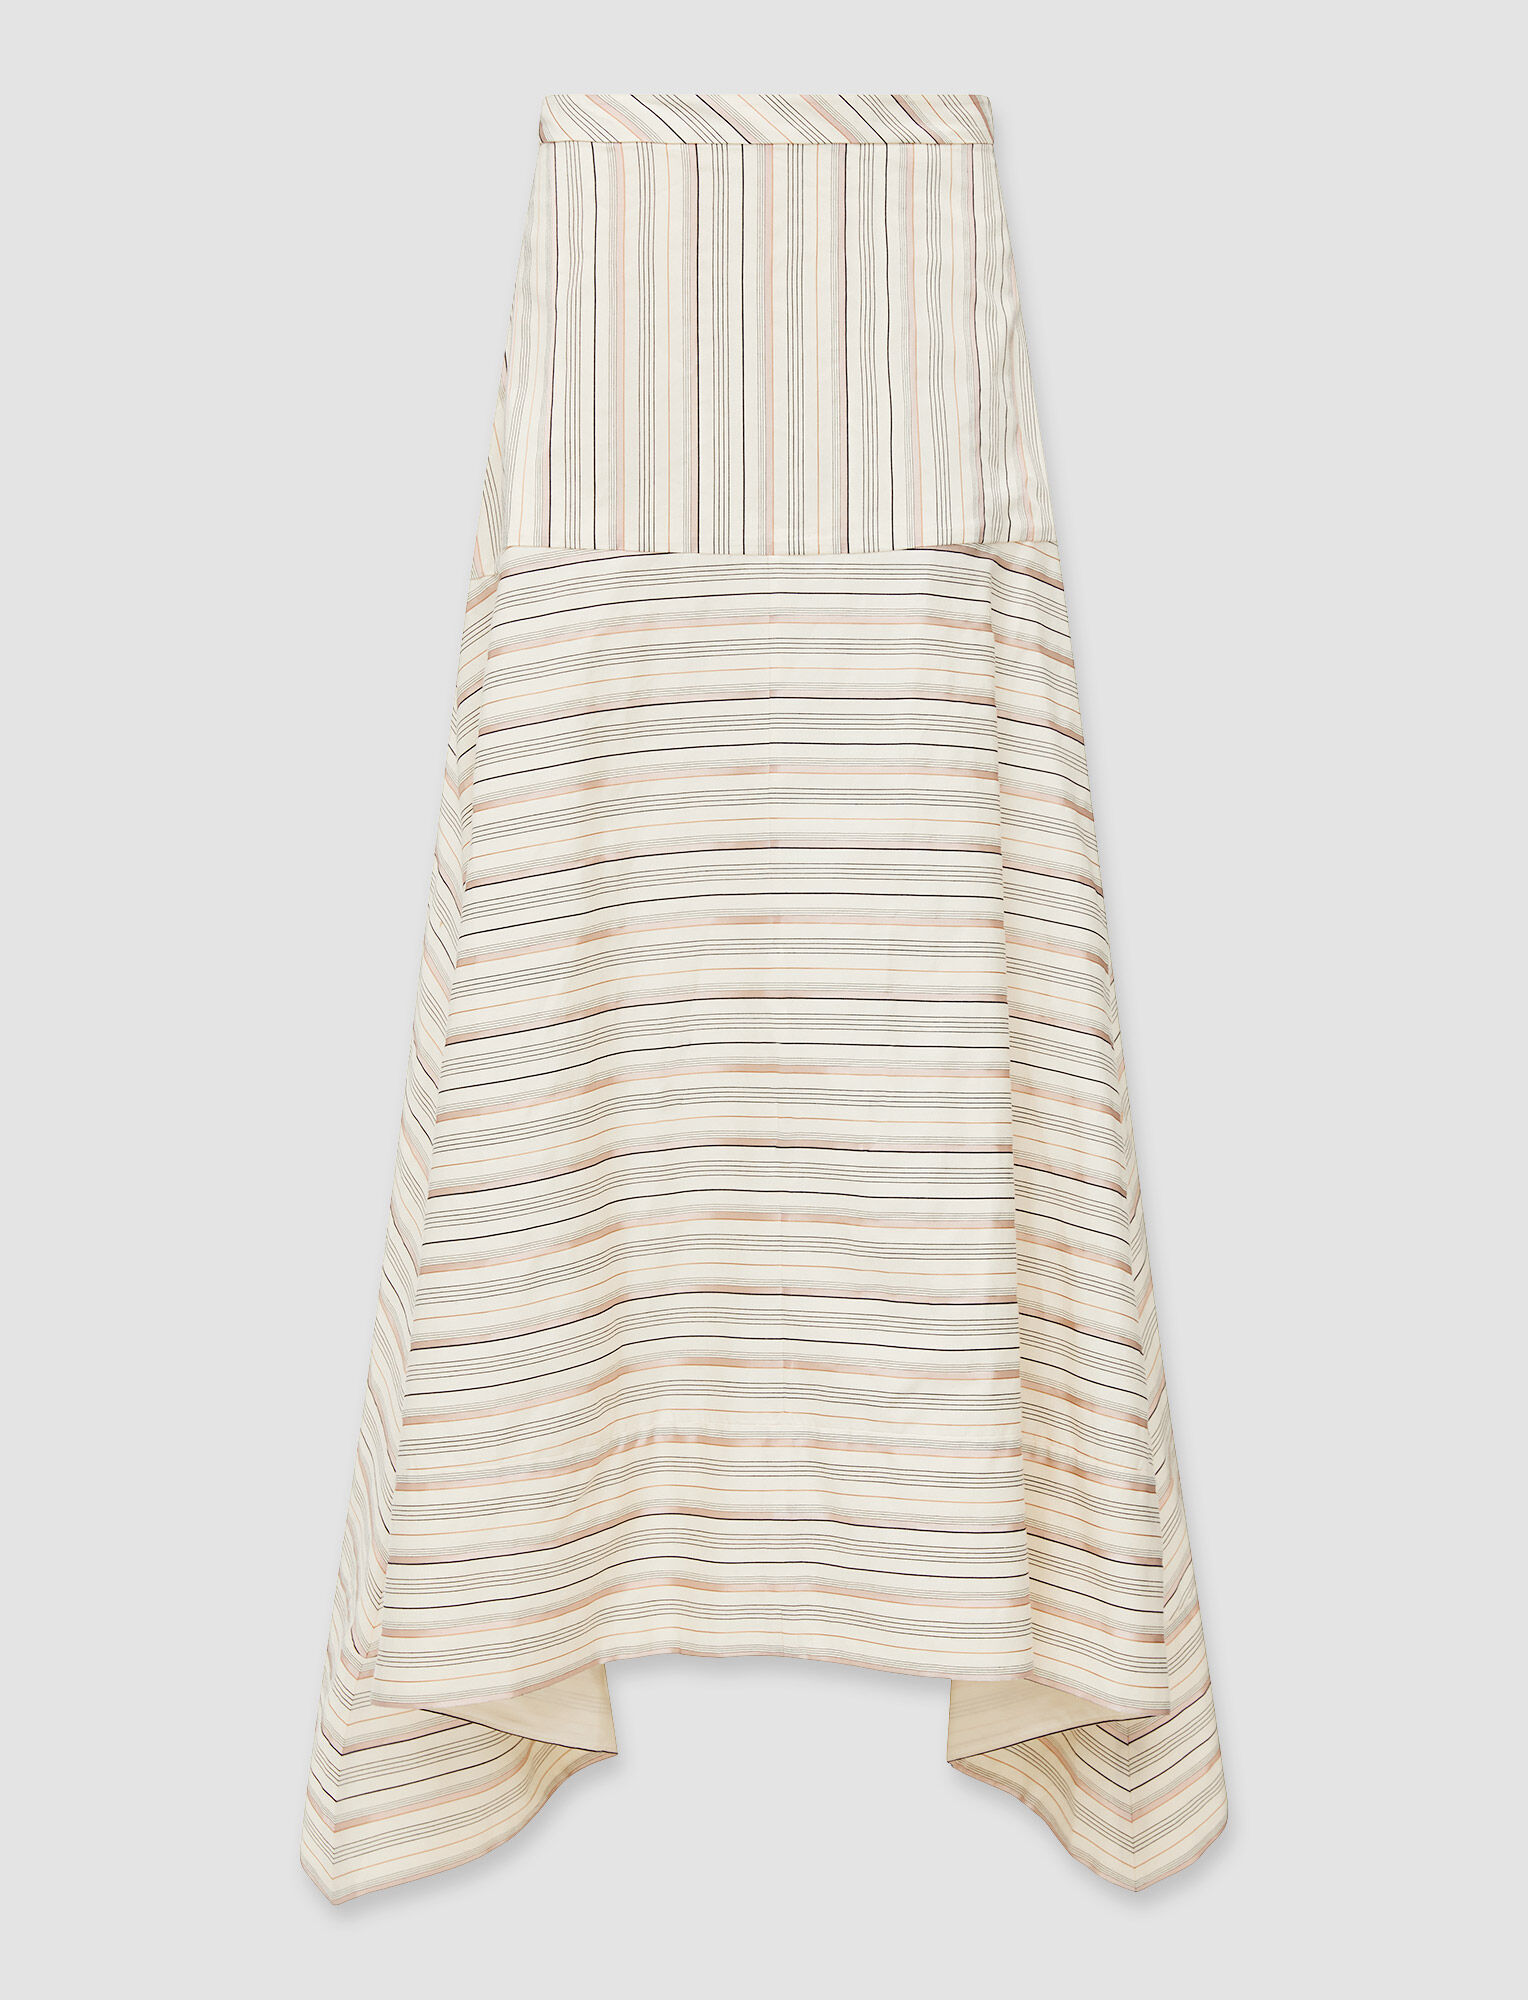 Joseph, Silk Cotton Stripe Dalwood Skirt, in Maplewood